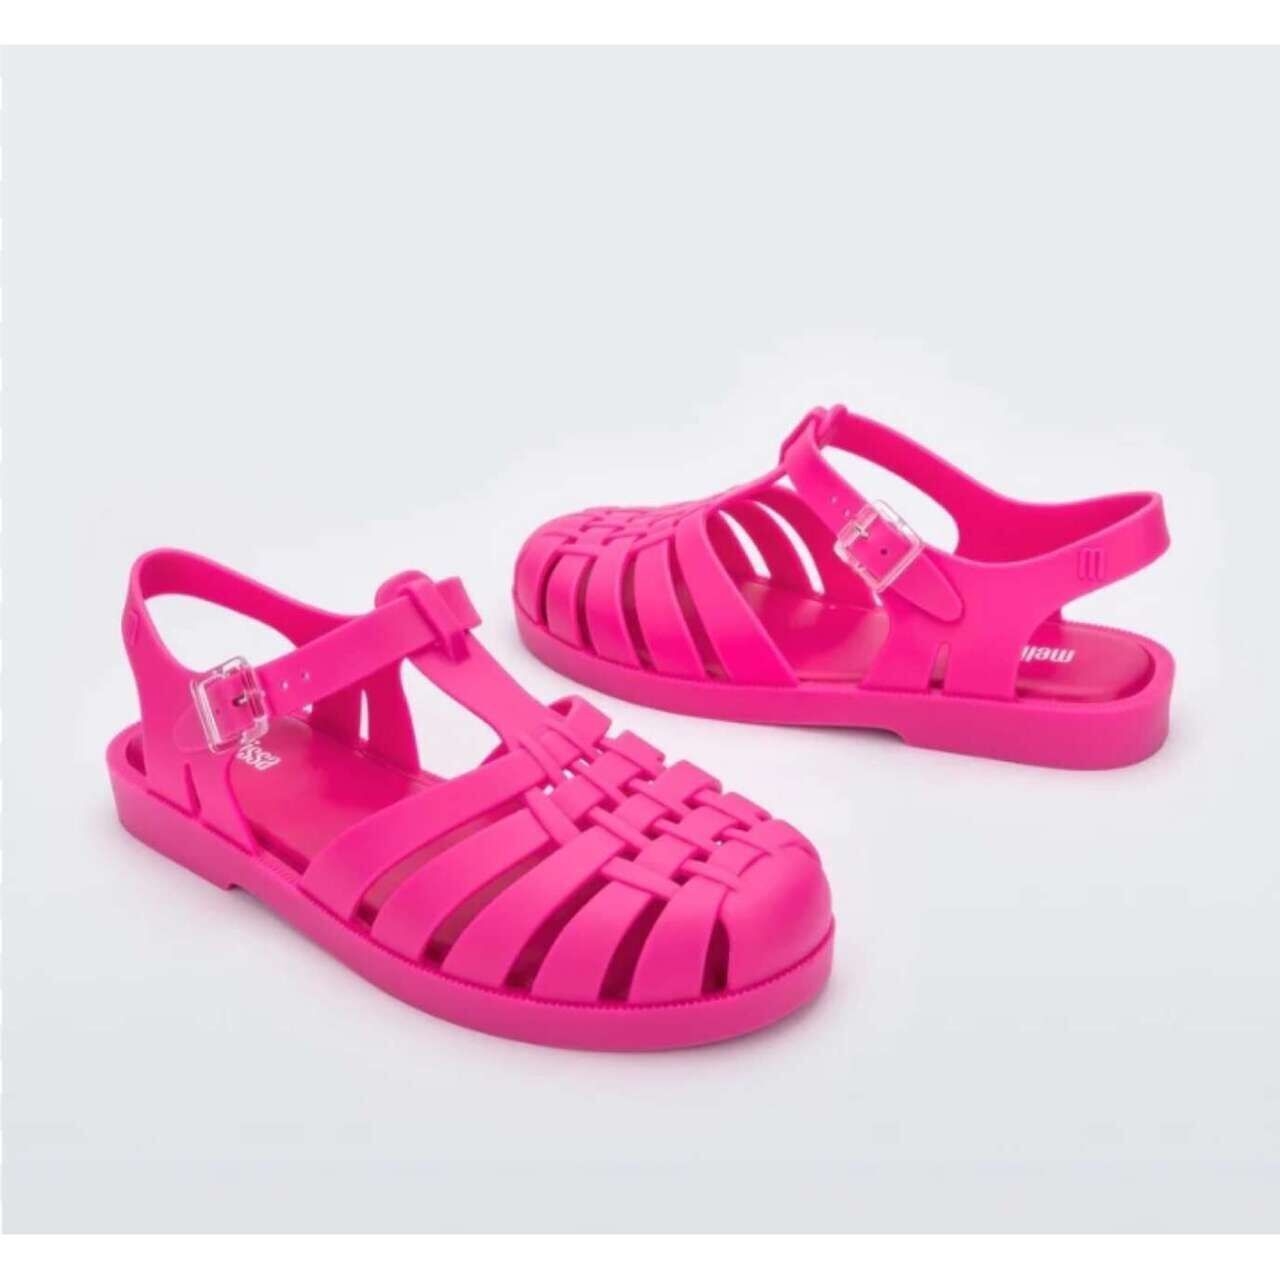 Melissa Possession AD Pink Sandals